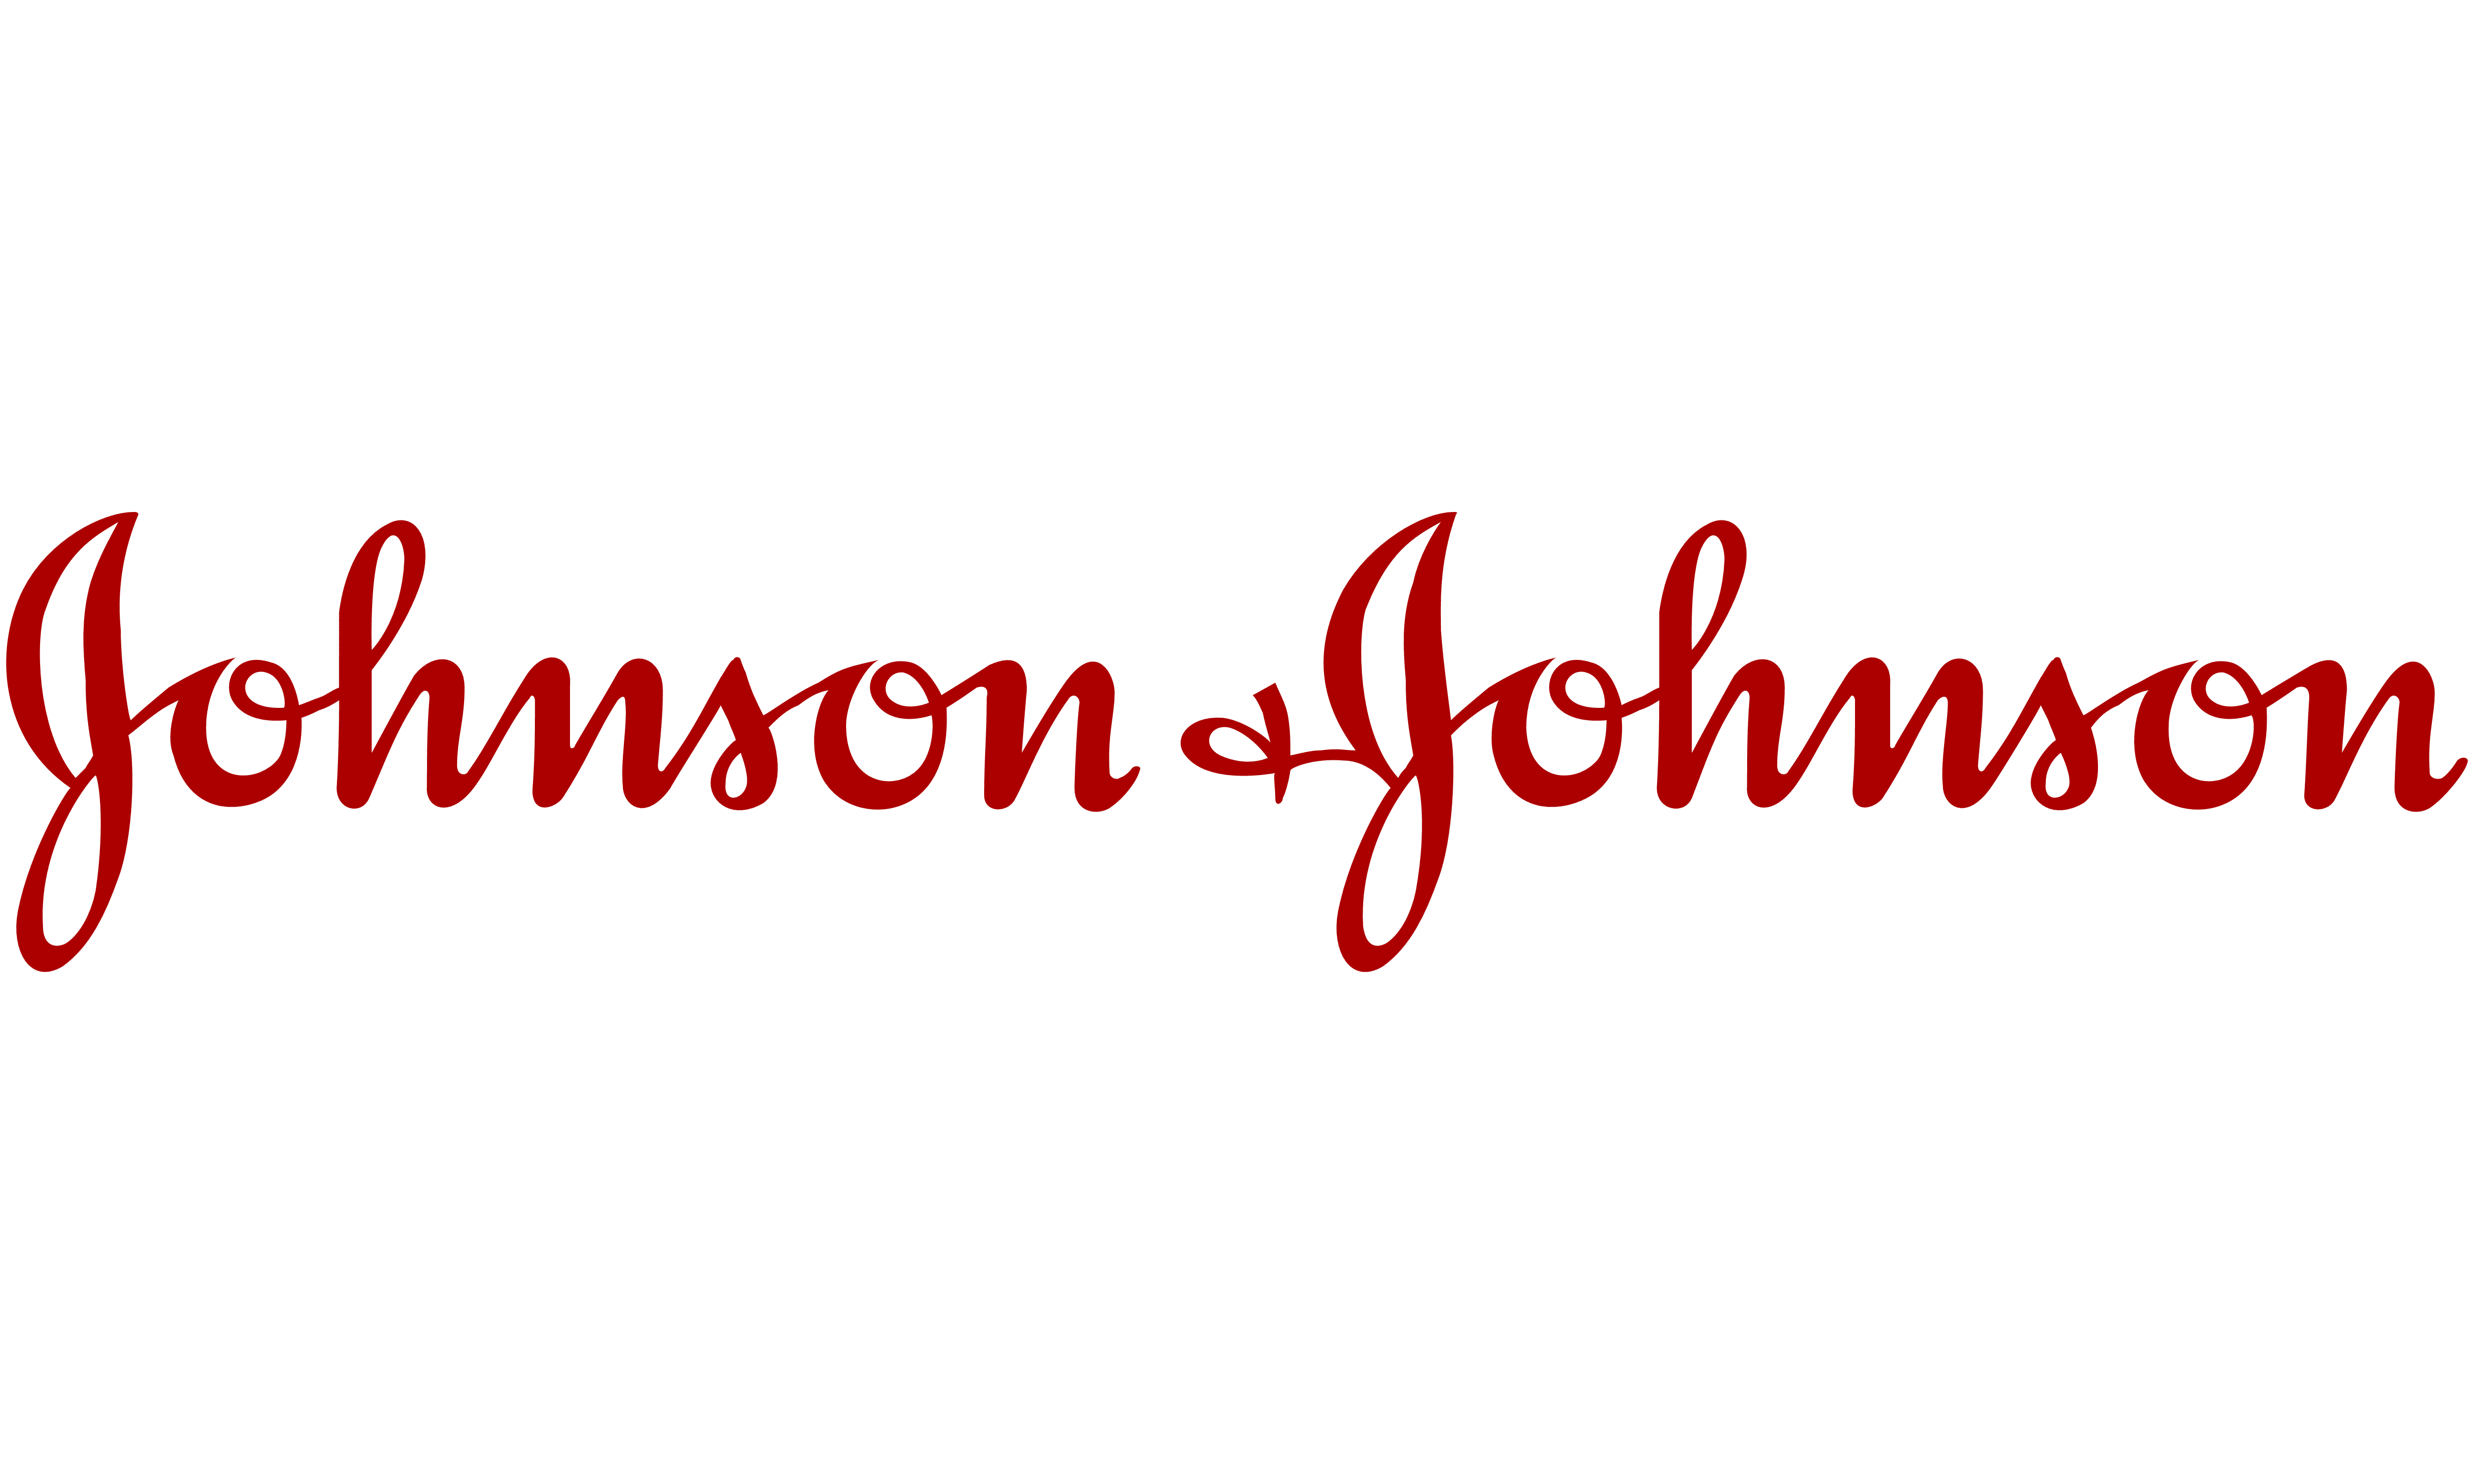 Johnson-and-Johnson logo